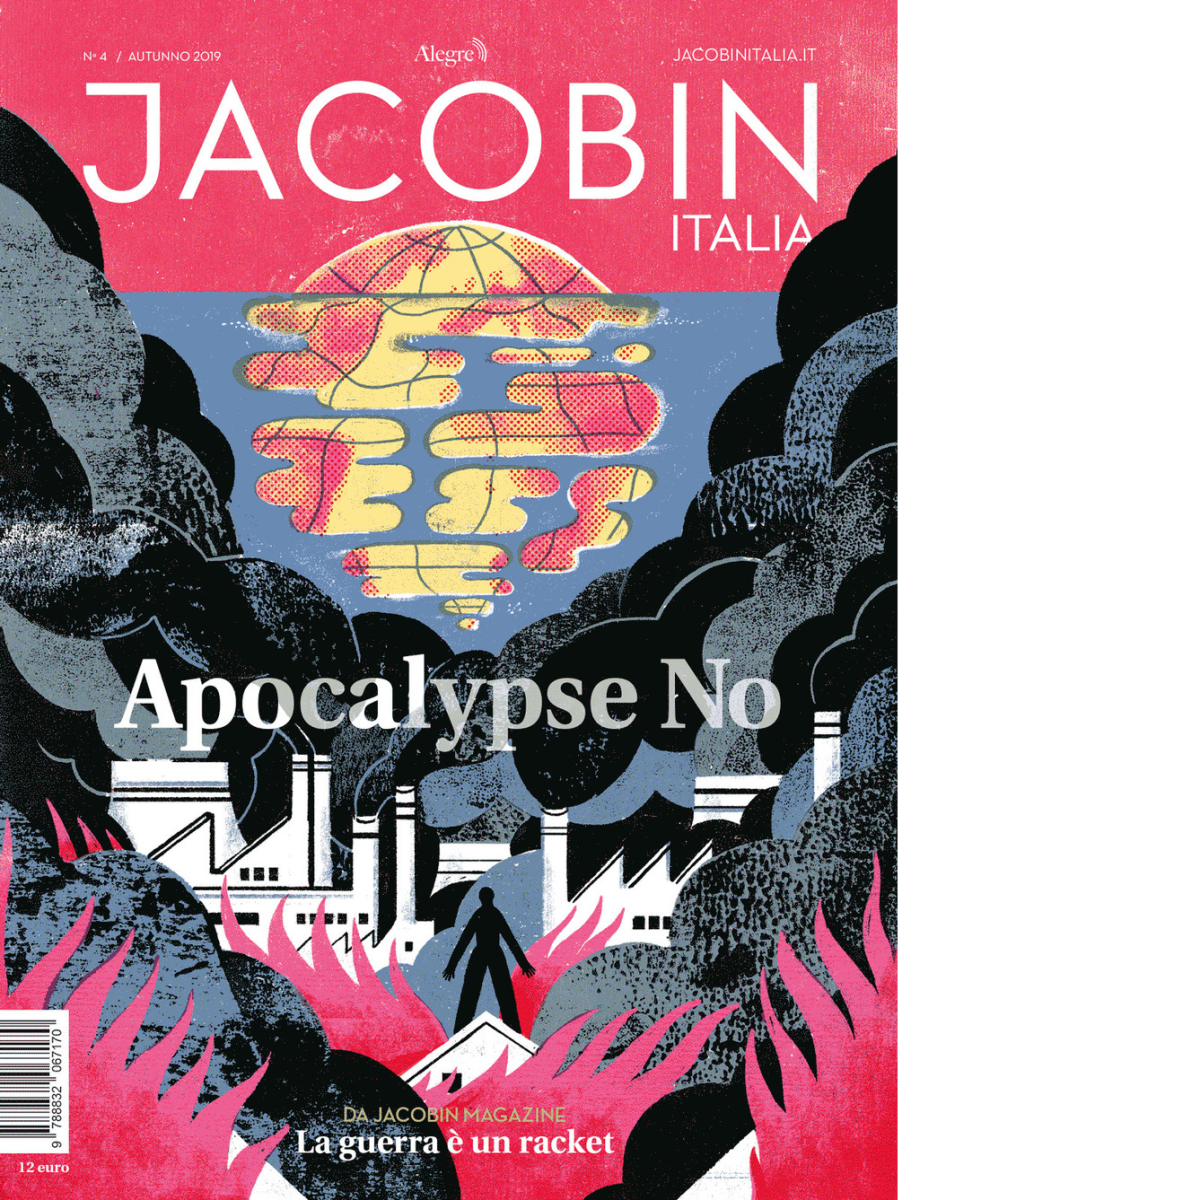 JACOBIN N 4 di AA.VV. - edizioni alegre, 2019